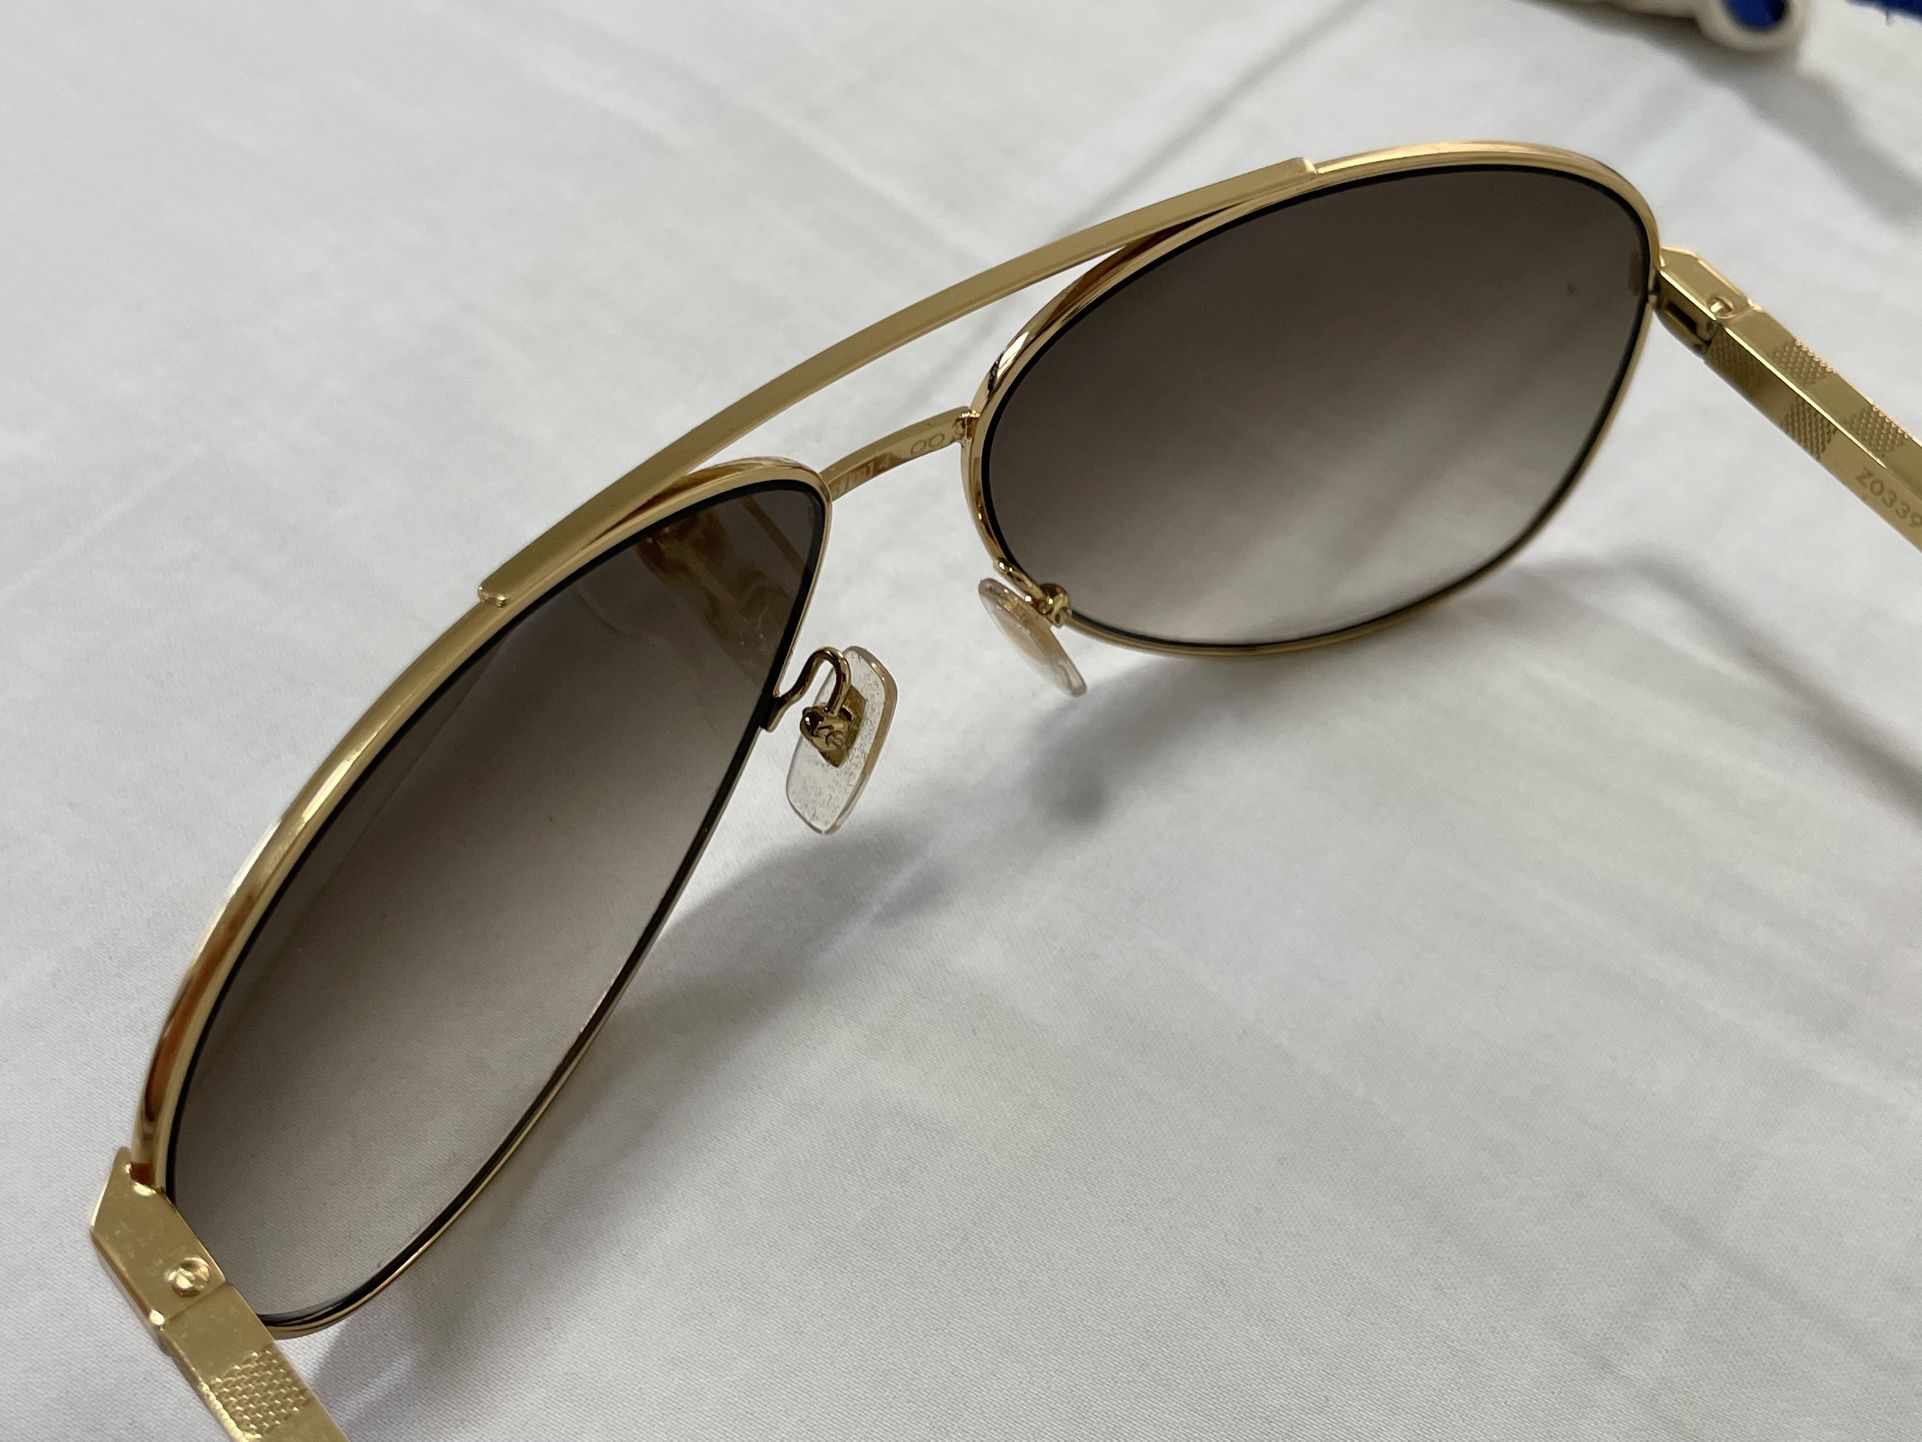 Louis Vuitton Attitude Pilot Sunglasses for Sale in San Dimas, CA